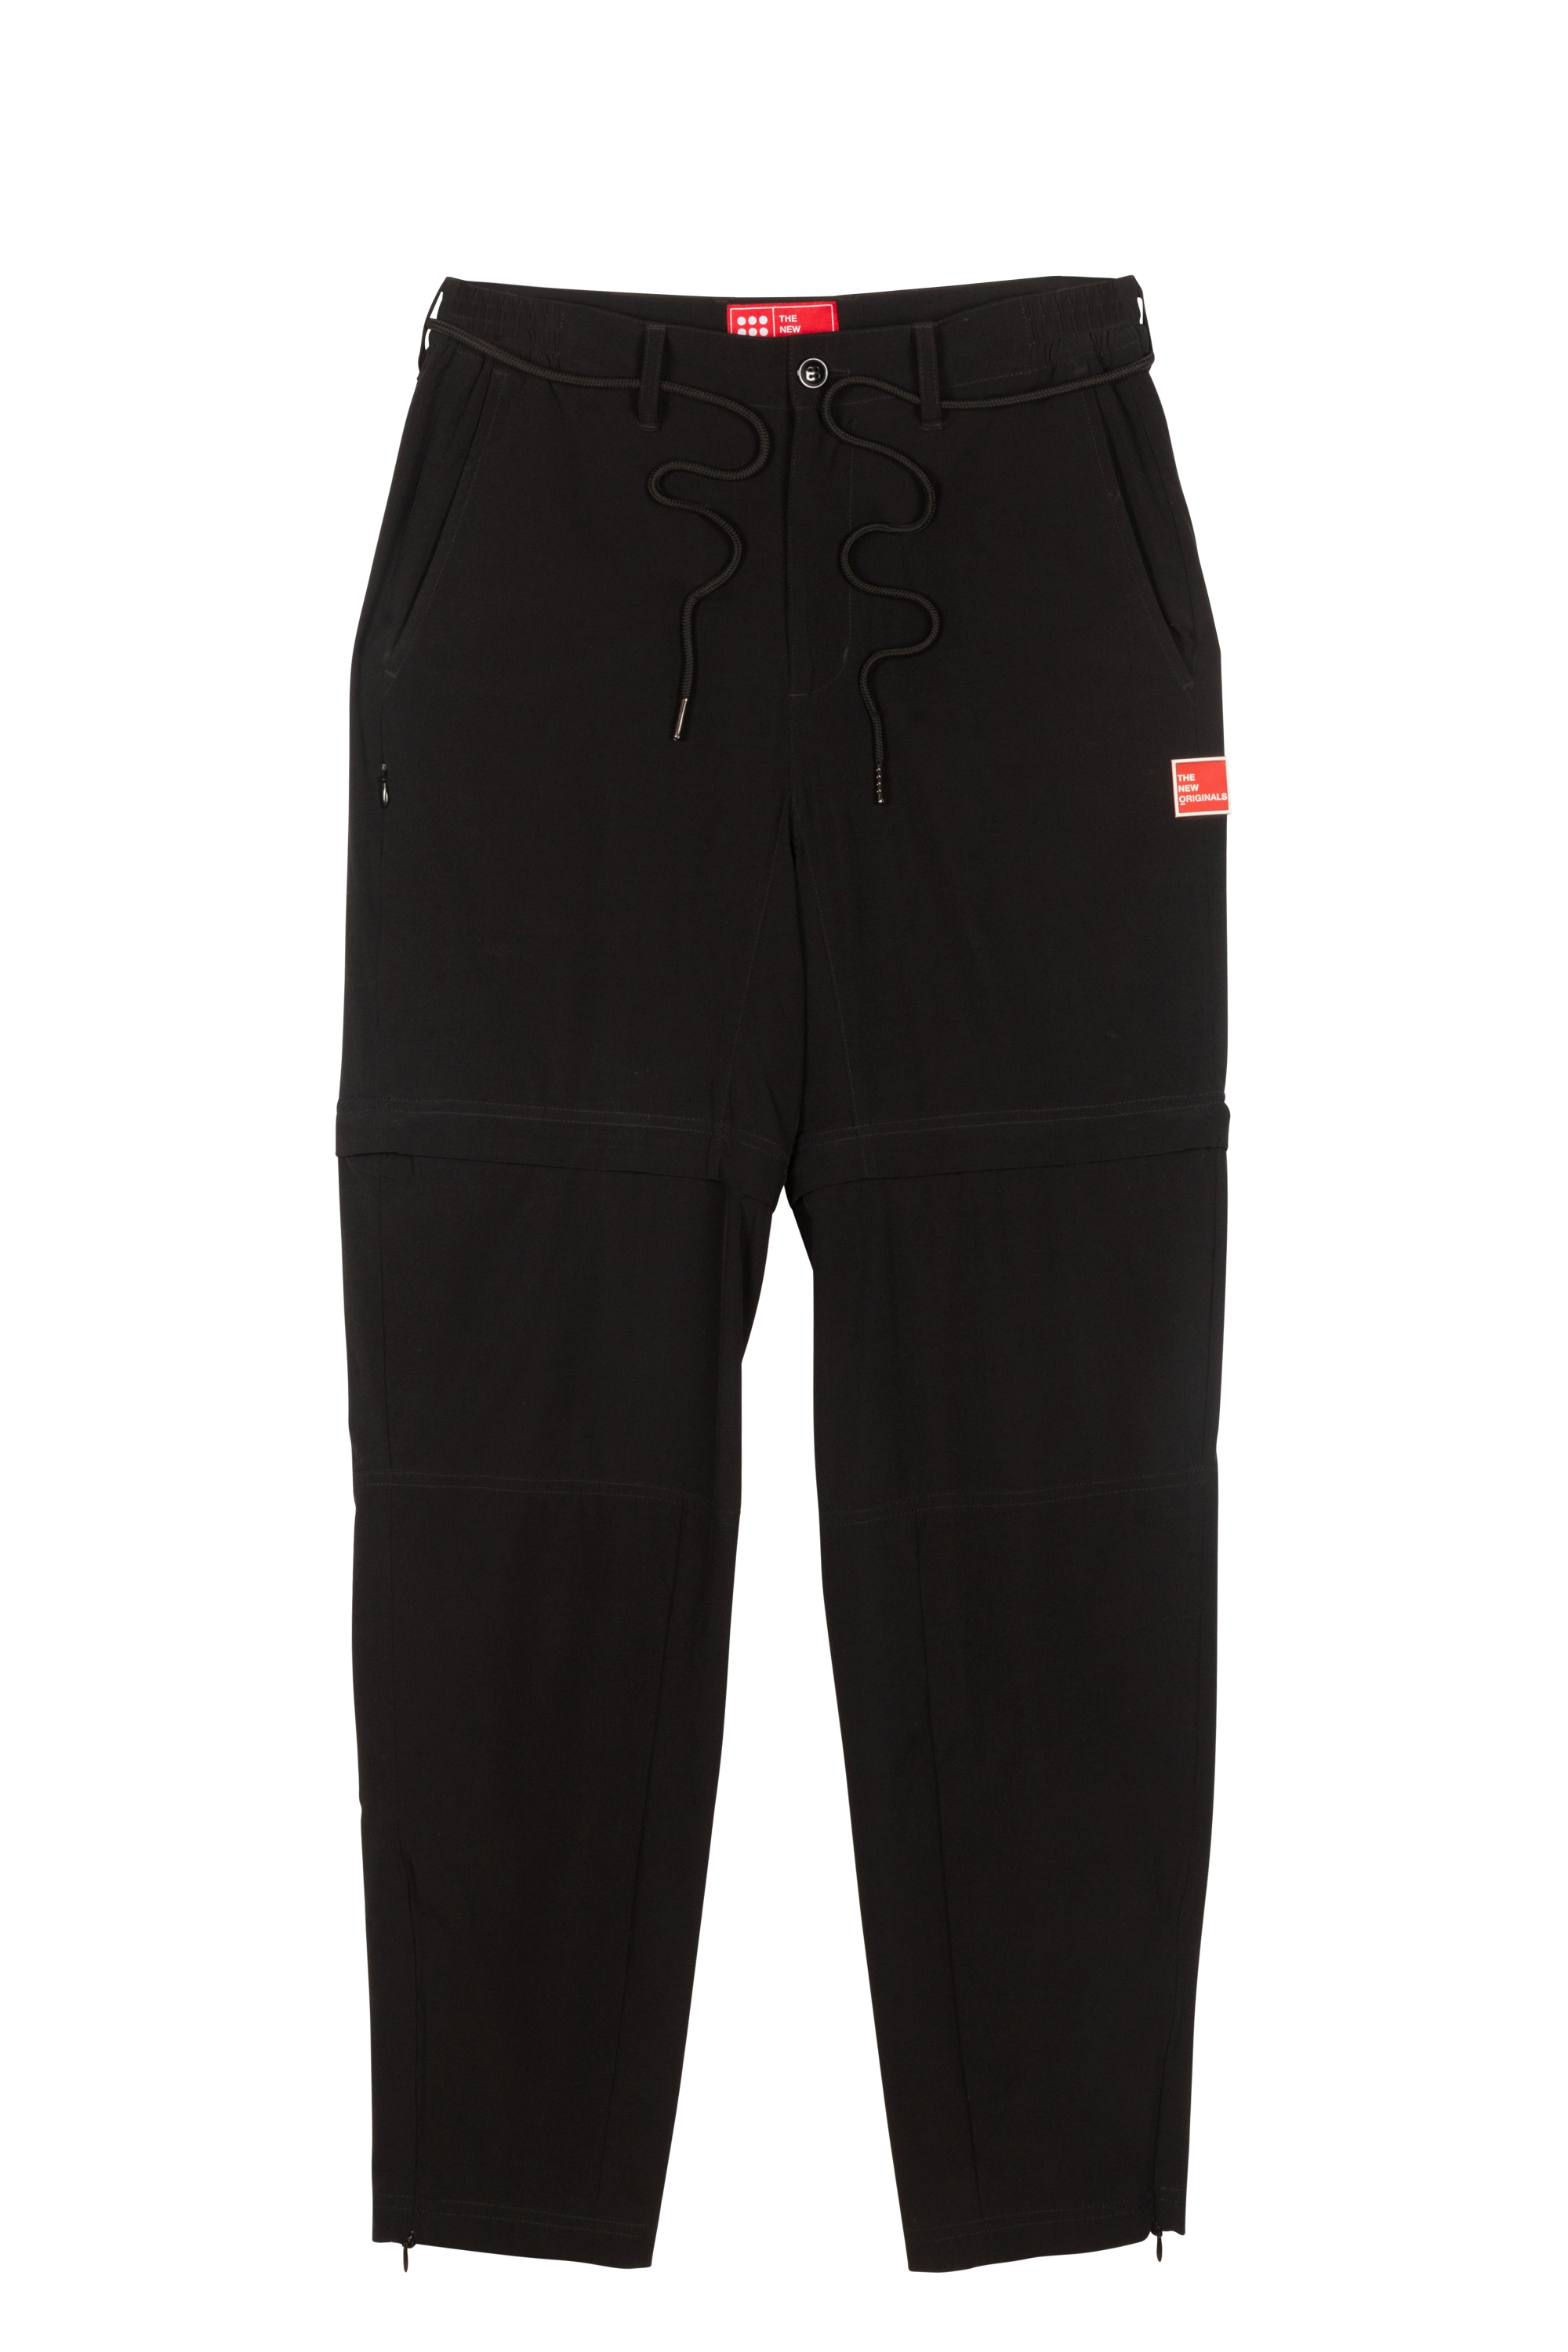 Parachute Trousers Black (SS21)